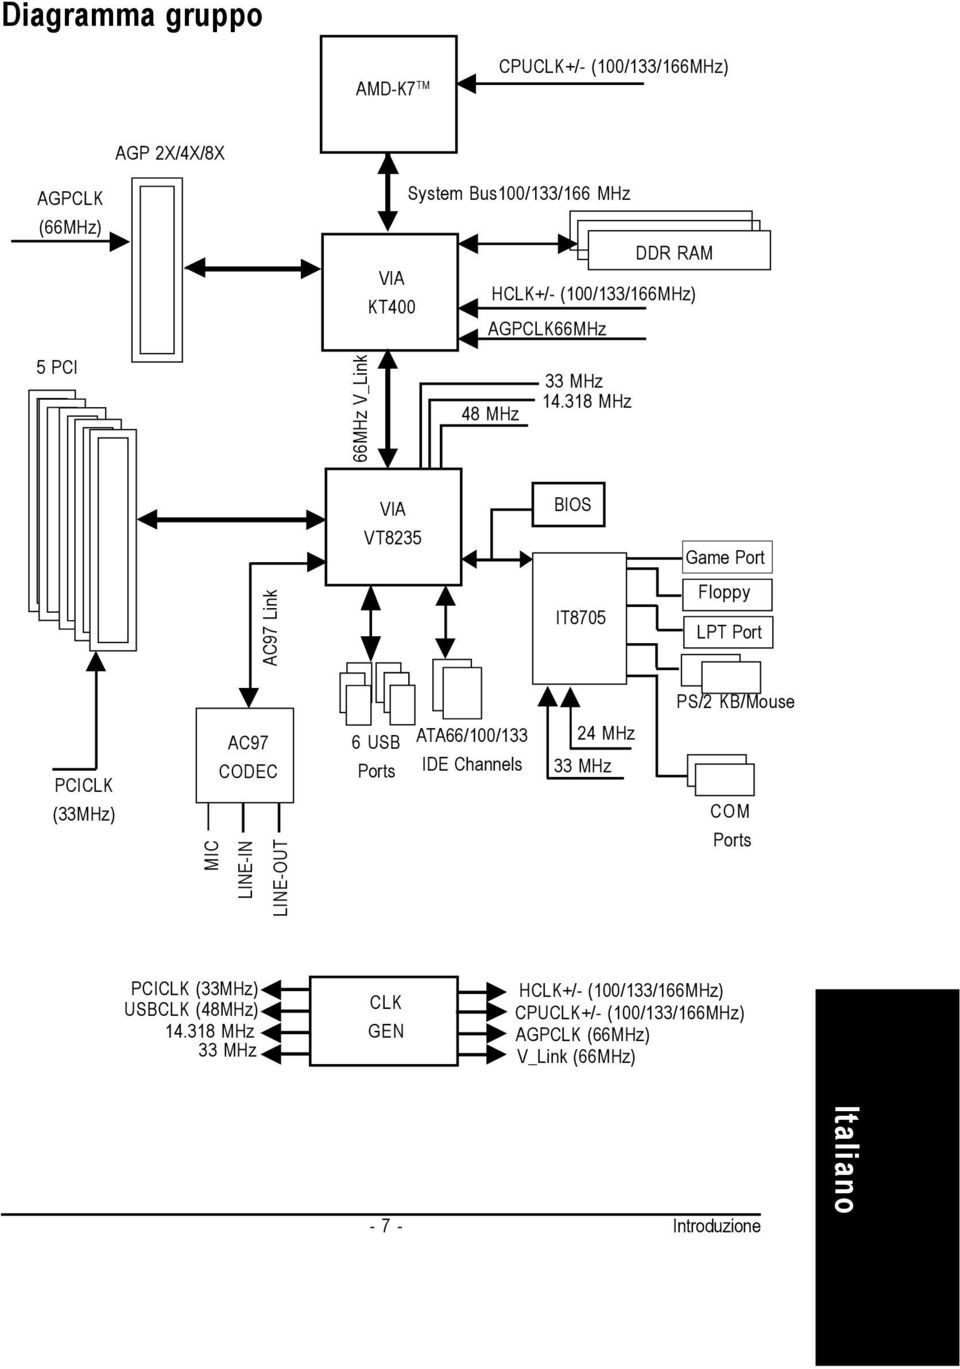 38 MHz VIA VT8235 BIOS Game Port AC97 Link IT8705 Floppy LPT Port PS/2 KB/Mouse PCICLK (33MHz) AC97 CODEC MIC LINE-IN LINE-OUT 6